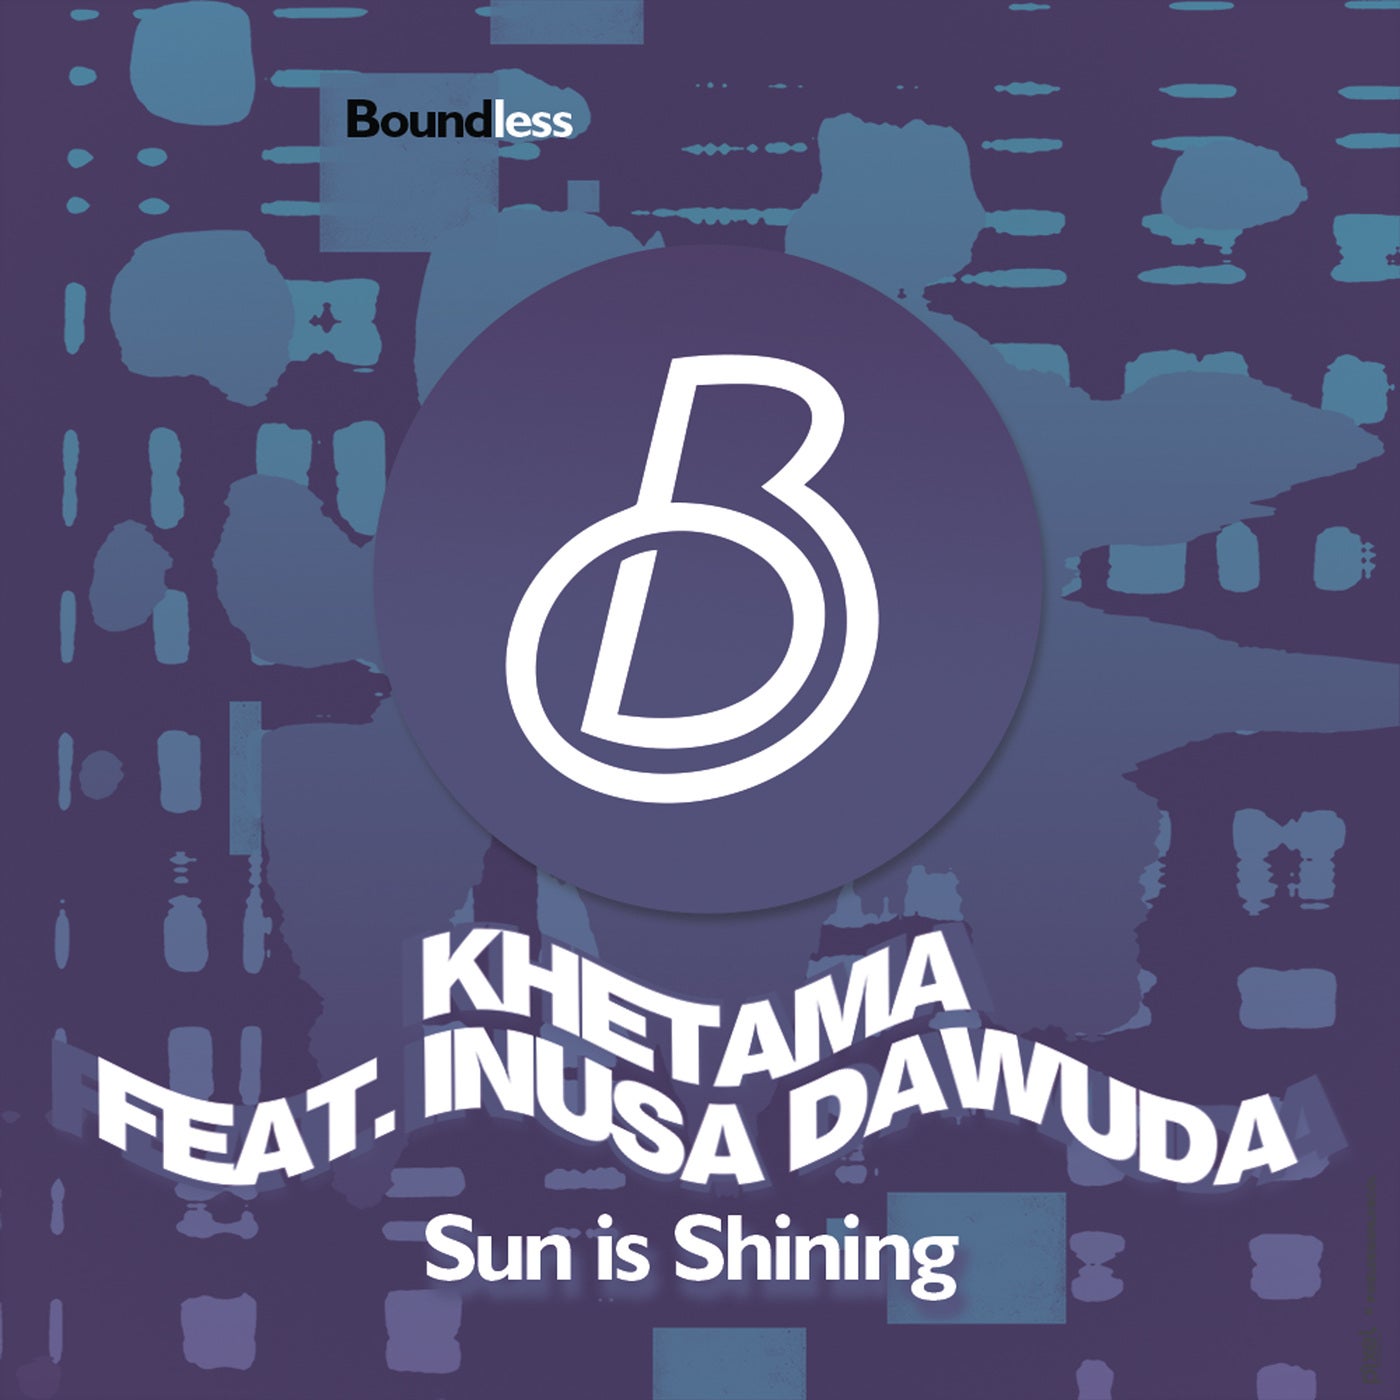 Sun Is Shining Feat. Inusa Dawuda